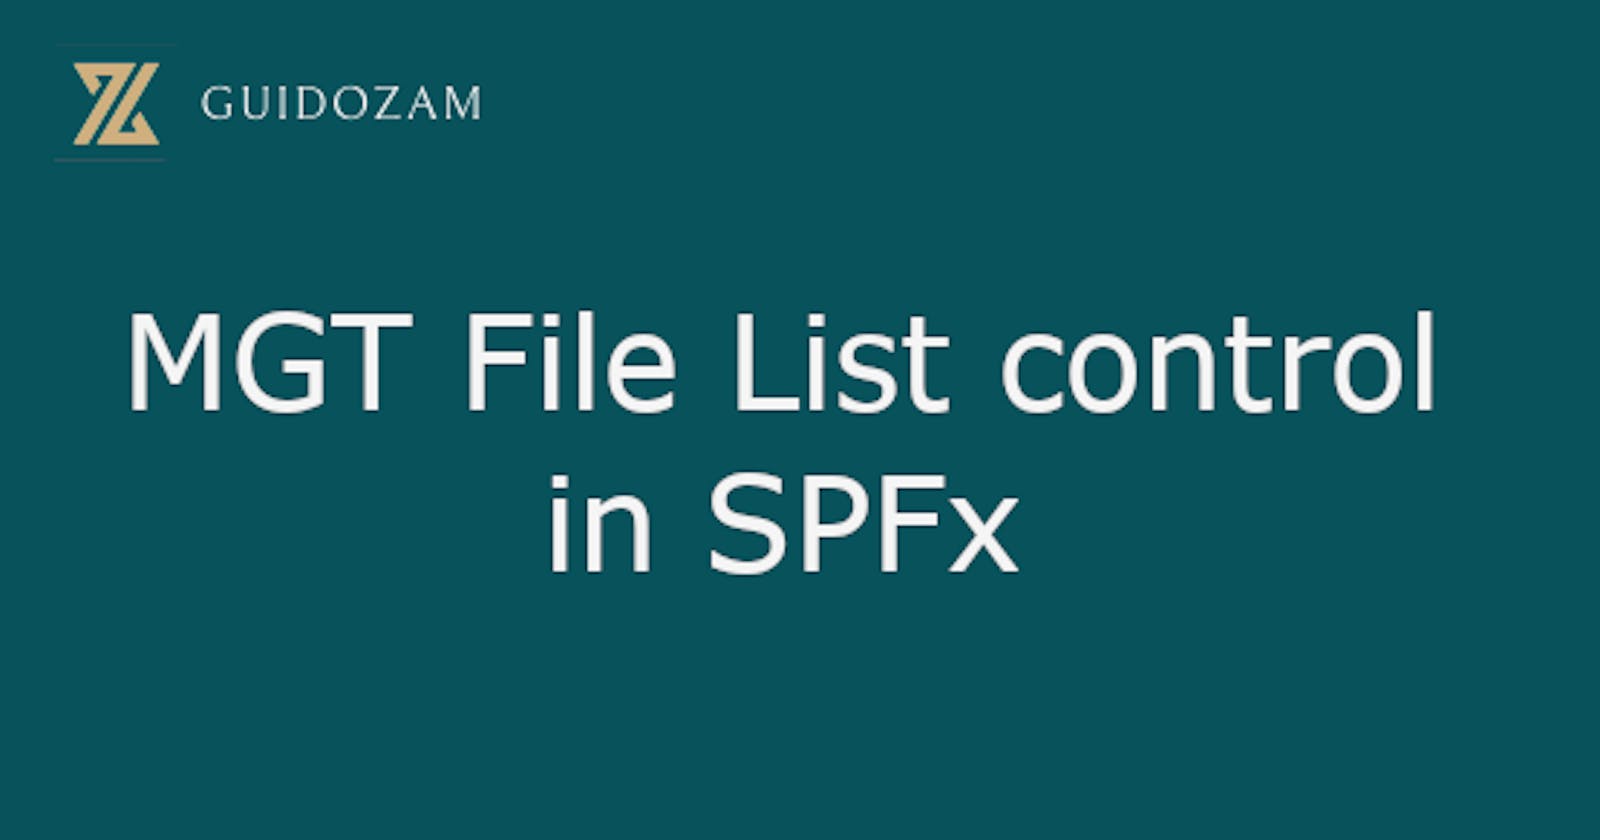 MGT File List control in SPFx